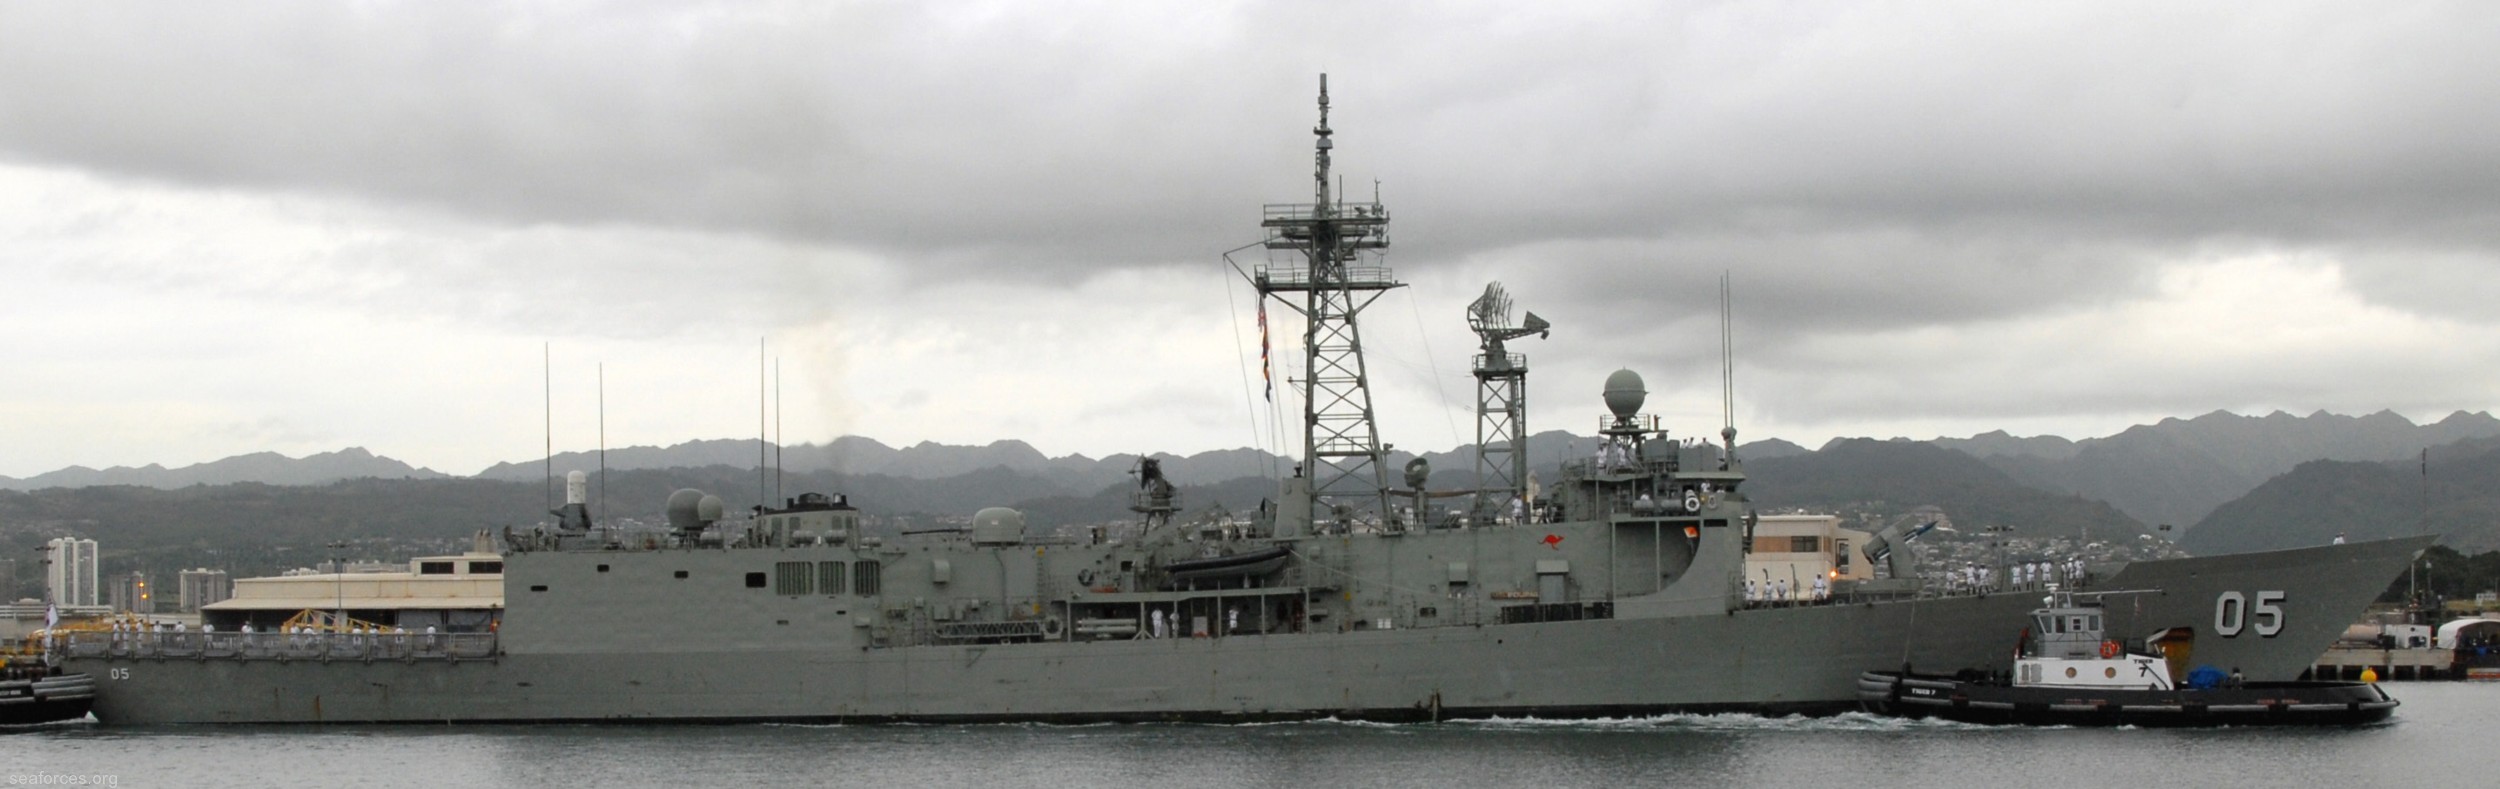 ffg-05 hmas melbourne adelaide class frigate royal australian navy 2009 03 pearl harbor hawaii